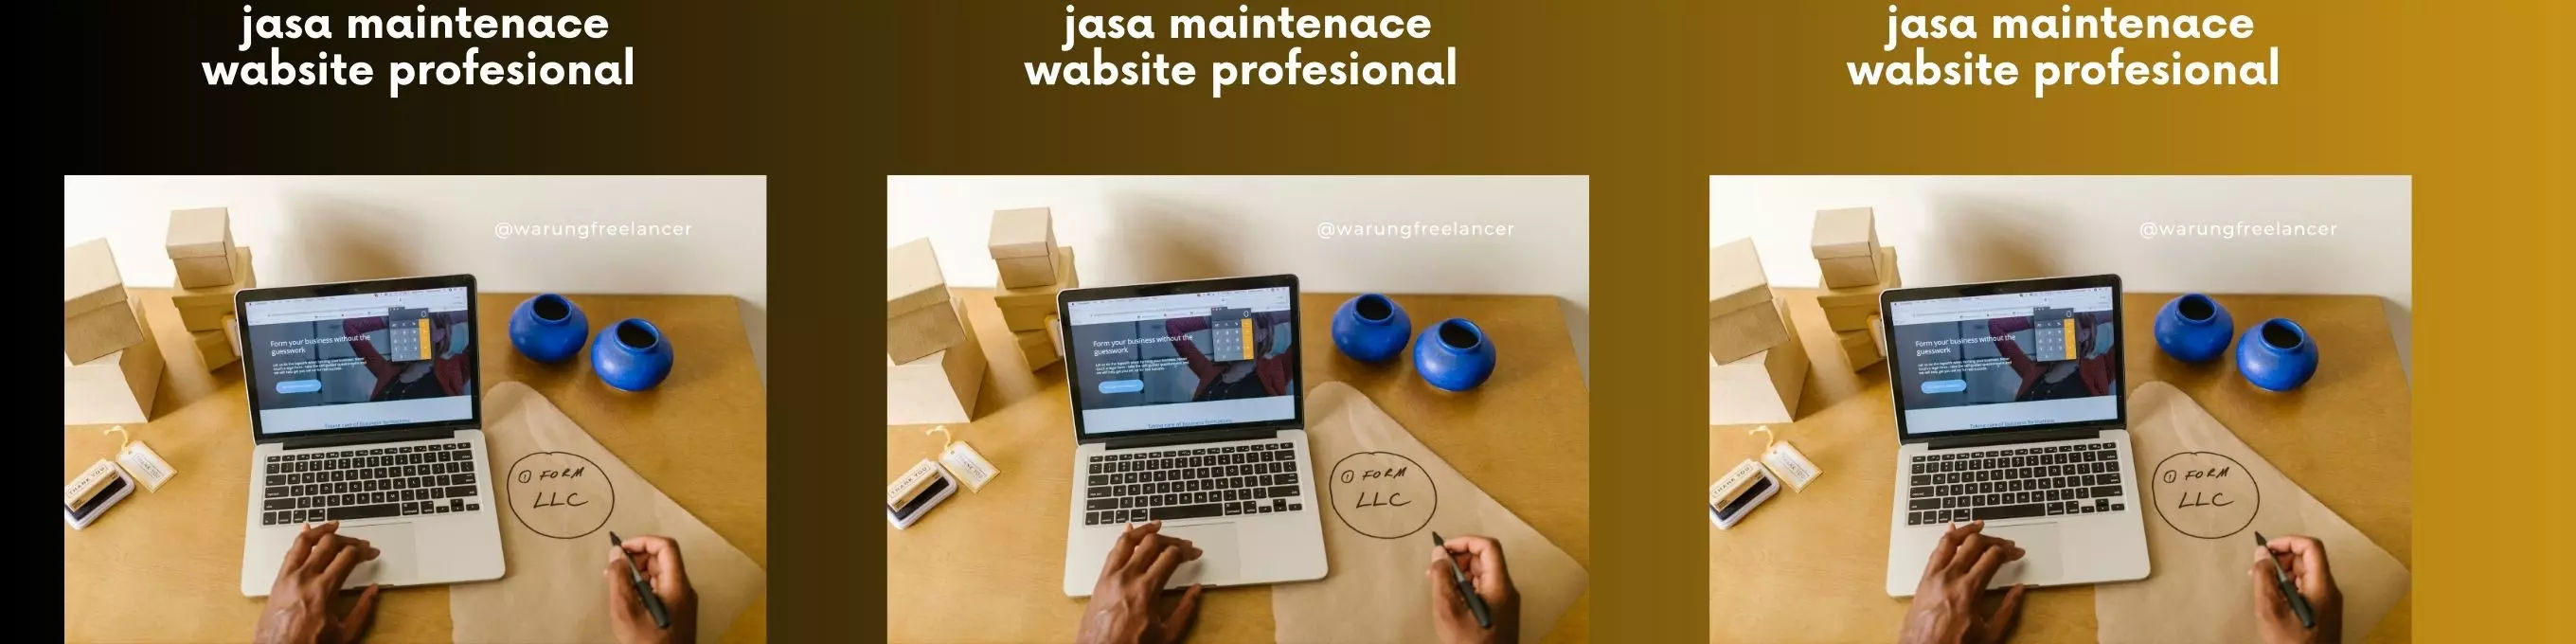 Jasa Maintenance Website Profesional